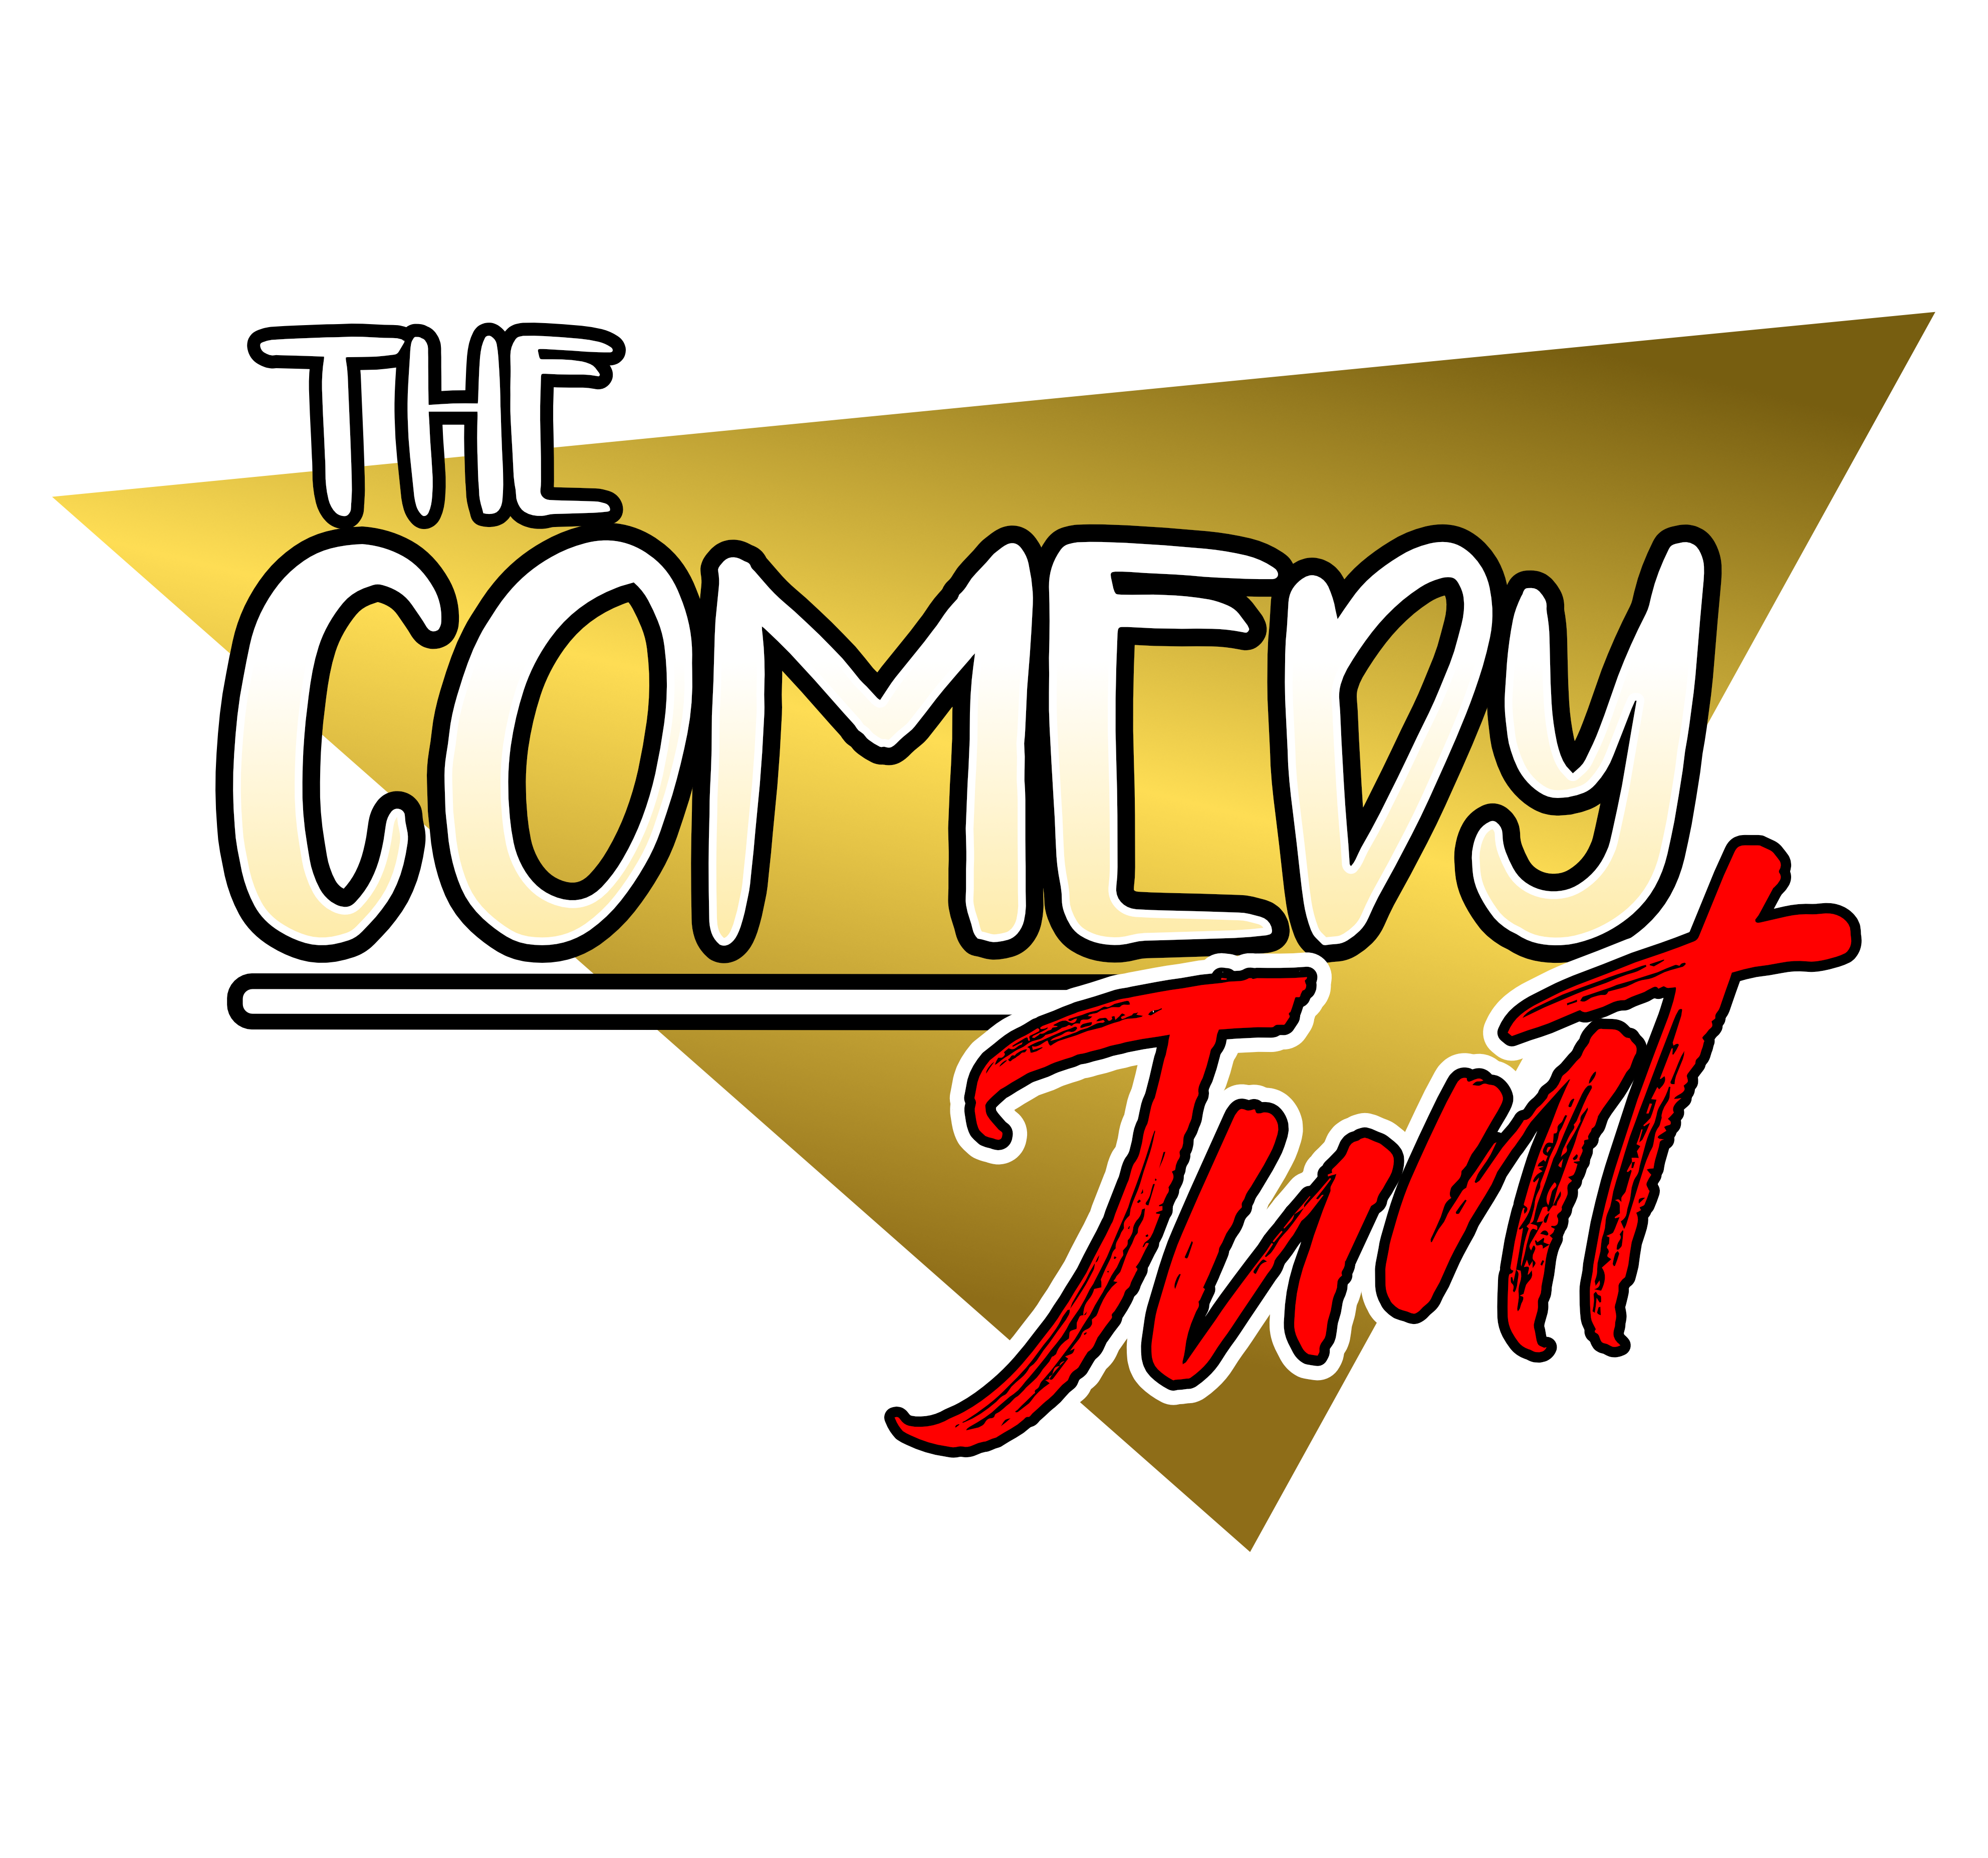 COMEDY WORLD - Comedy World, Inc. Trademark Registration